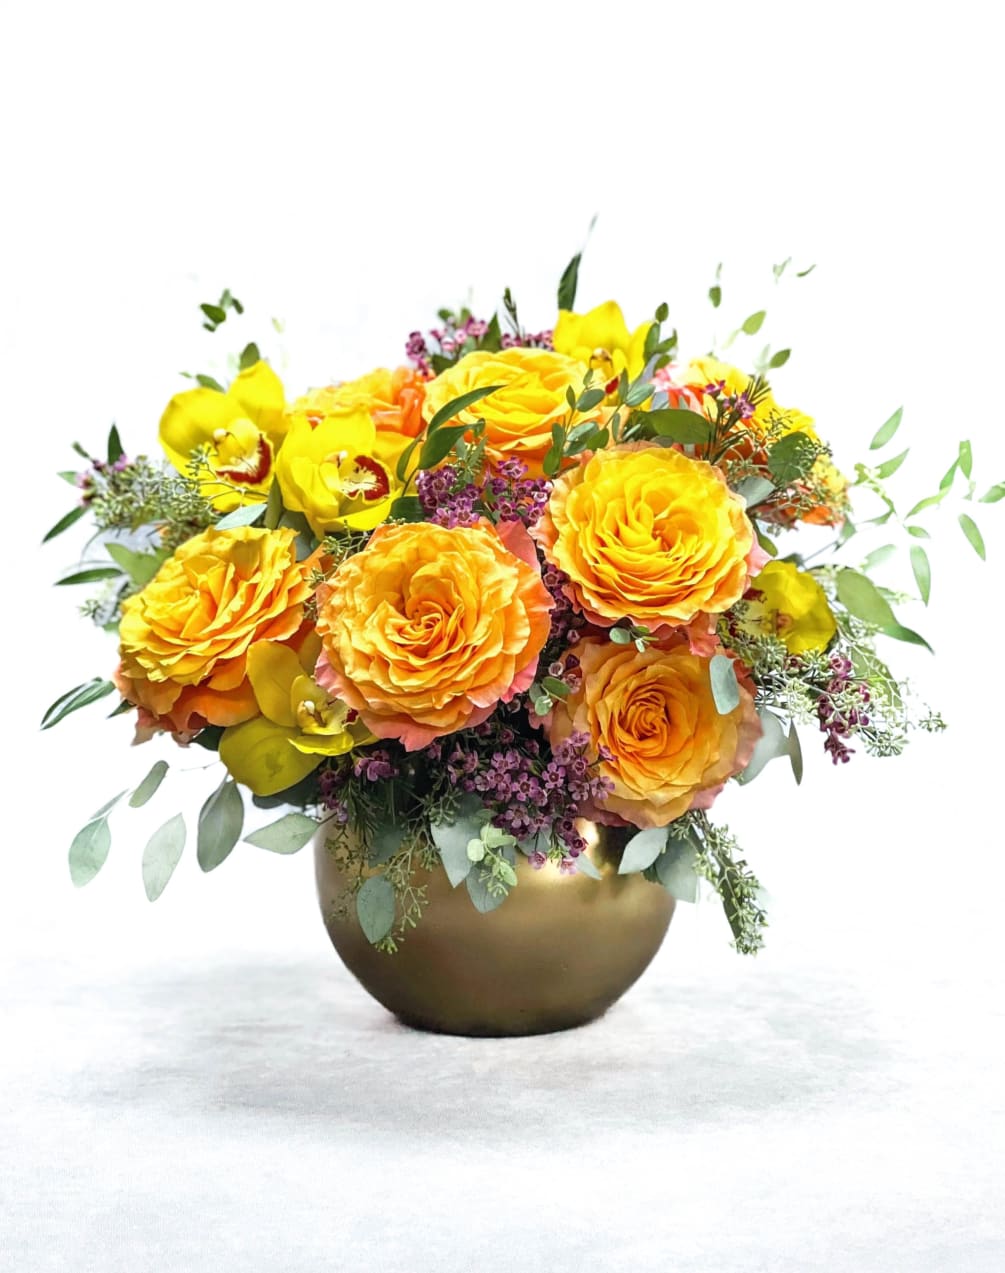 Gorgeous and elegant floral arrangement in a short vase  